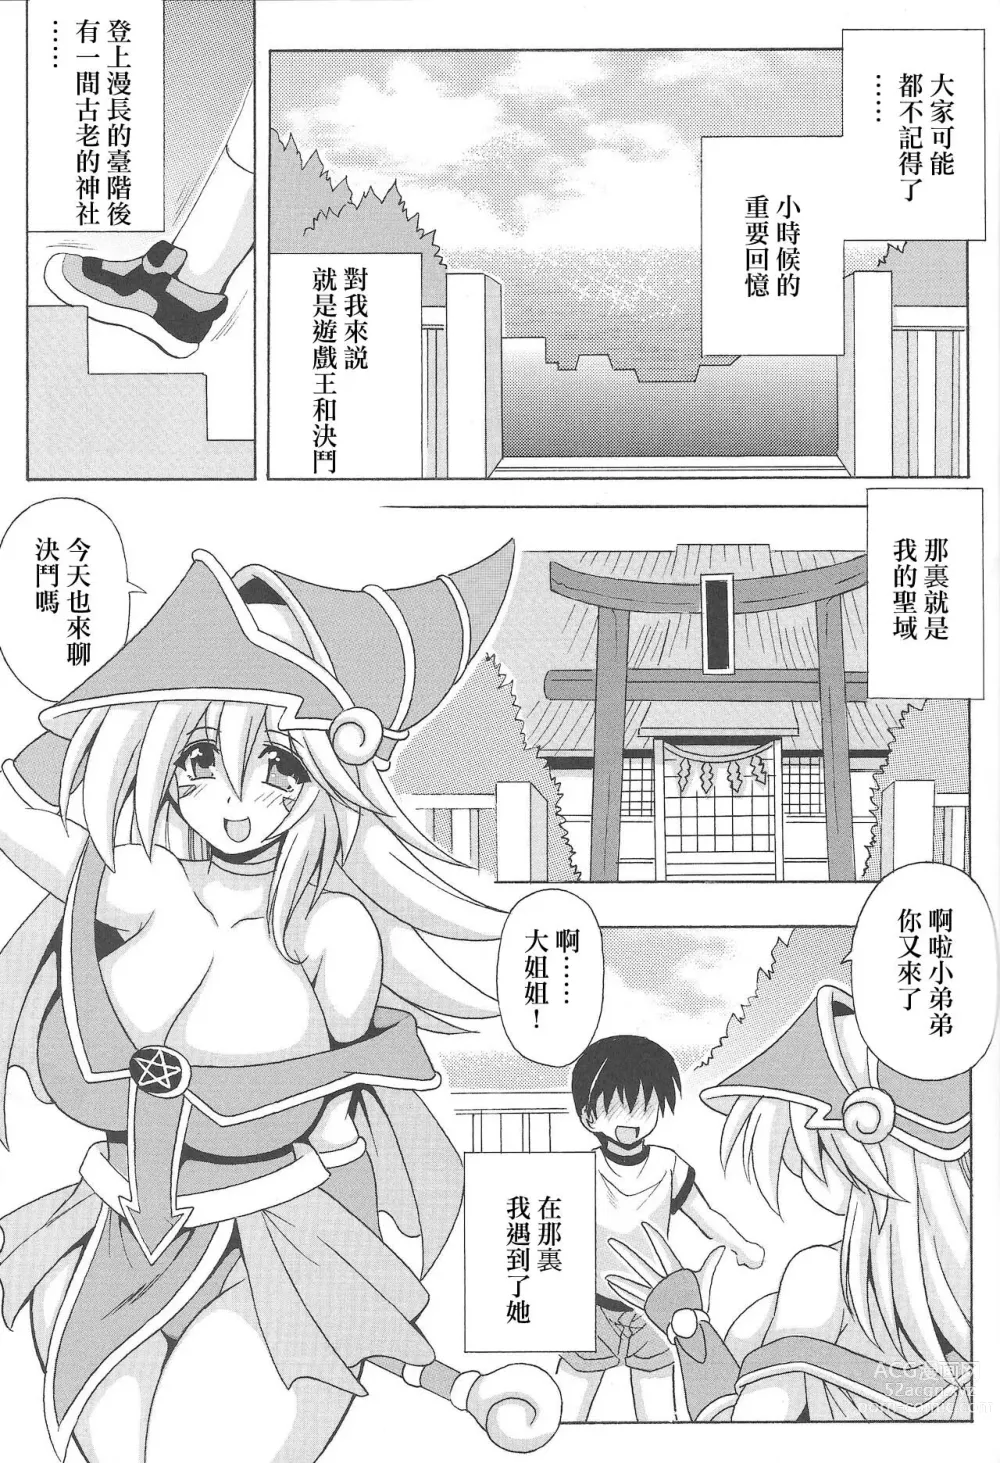 Page 2 of doujinshi Shotagui Onee-san BMG